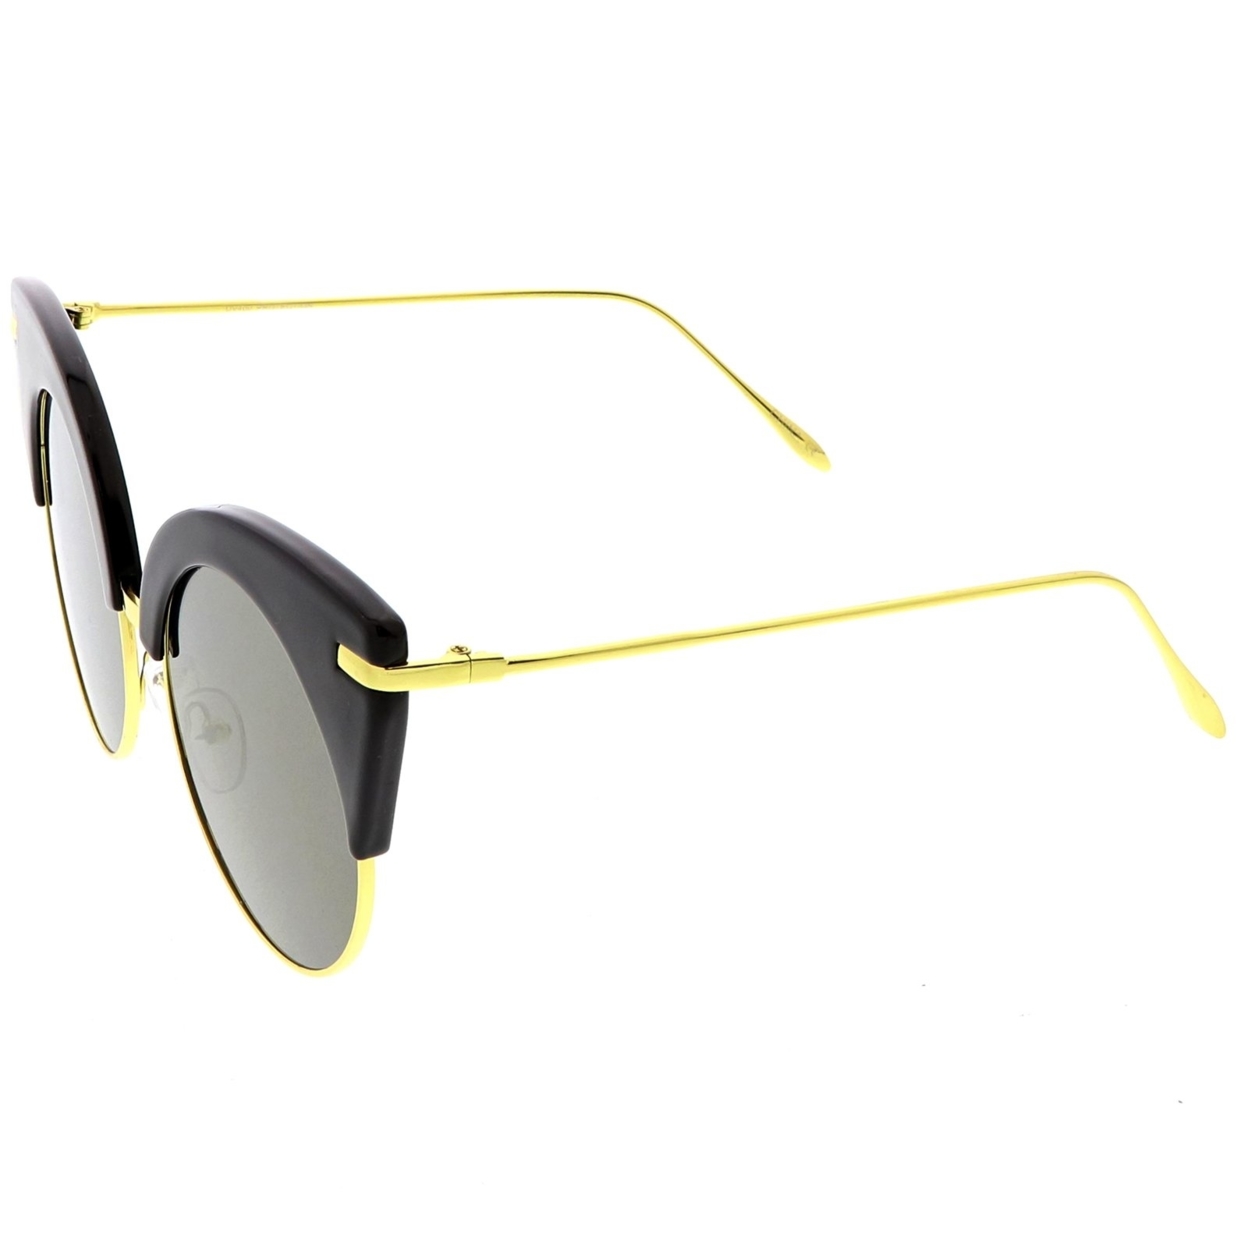 Oversize Half Frame Cat Eye Sunglasses Ultra Slim Arms Round Mirrored Flat Lens 54mm - Black Gold / Blue Mirror